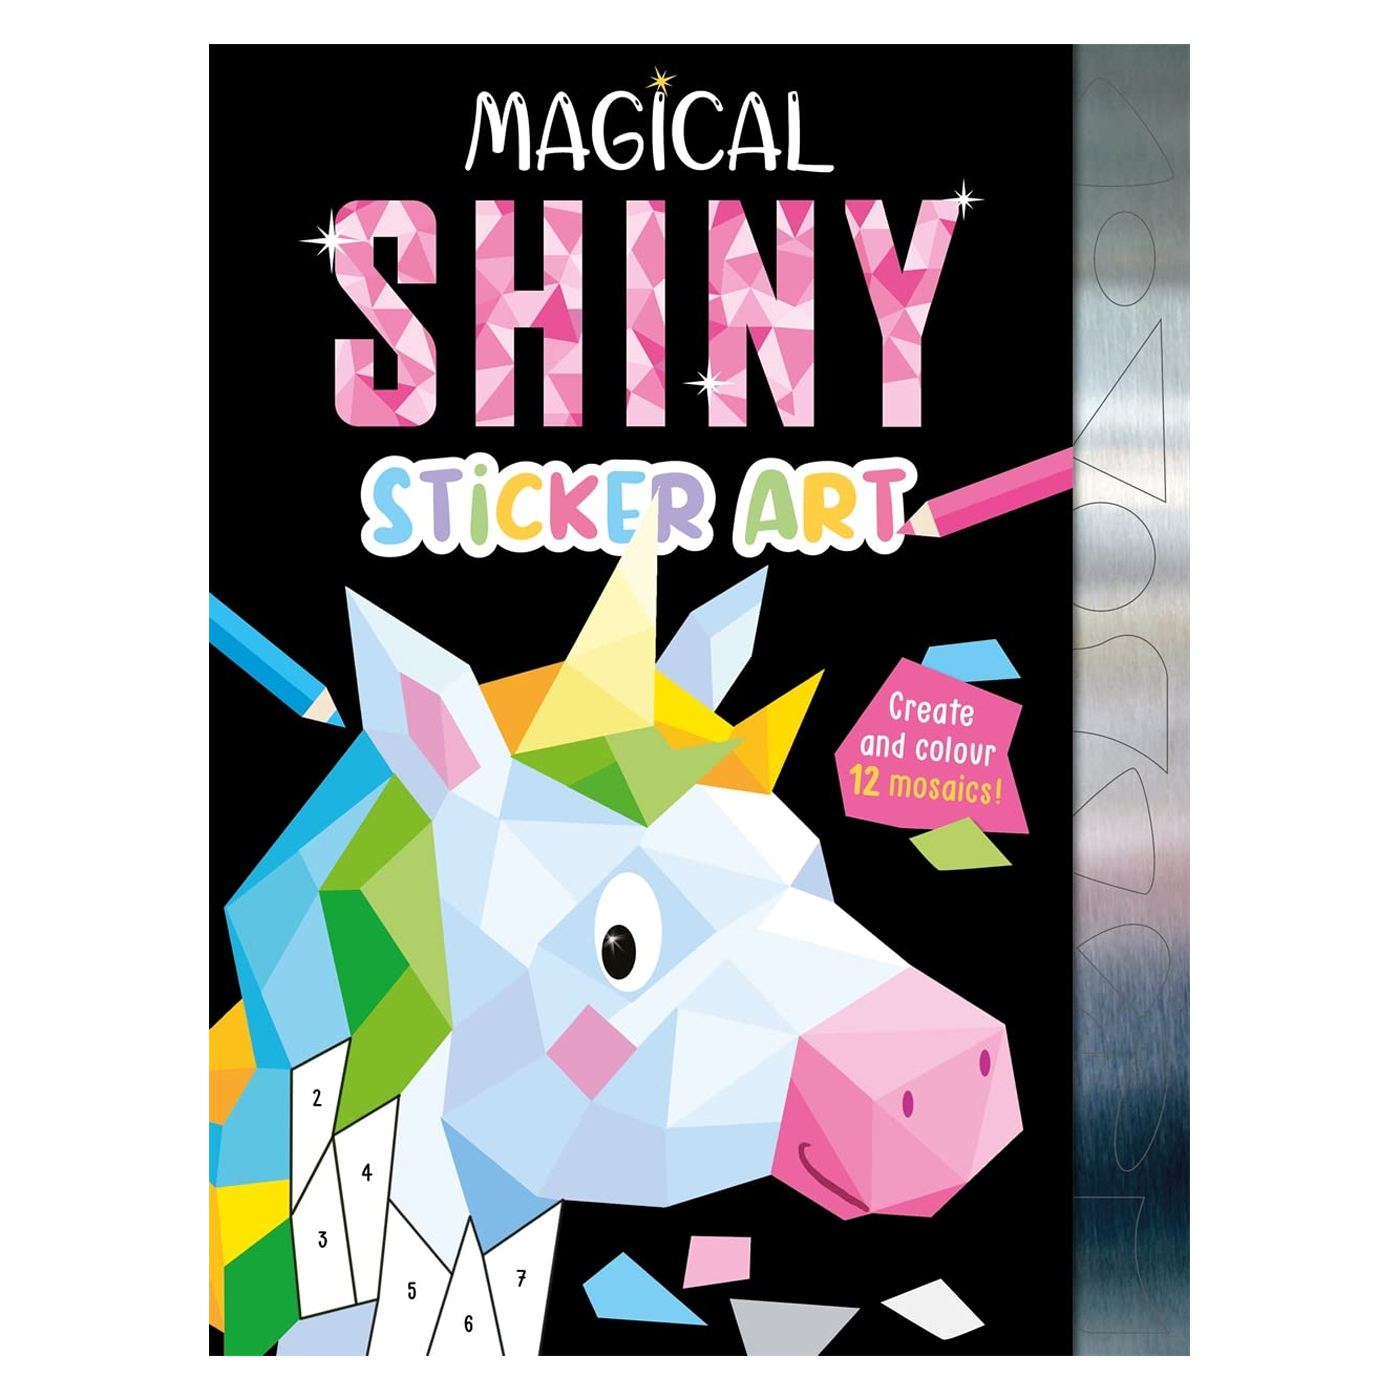  Magical Shiny Sticker Art